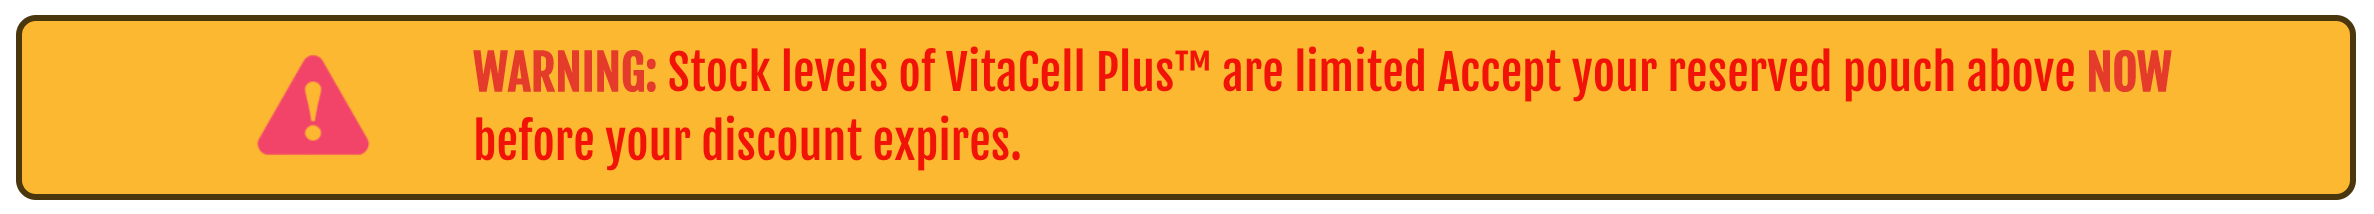 VitaCell Plus - WARNING